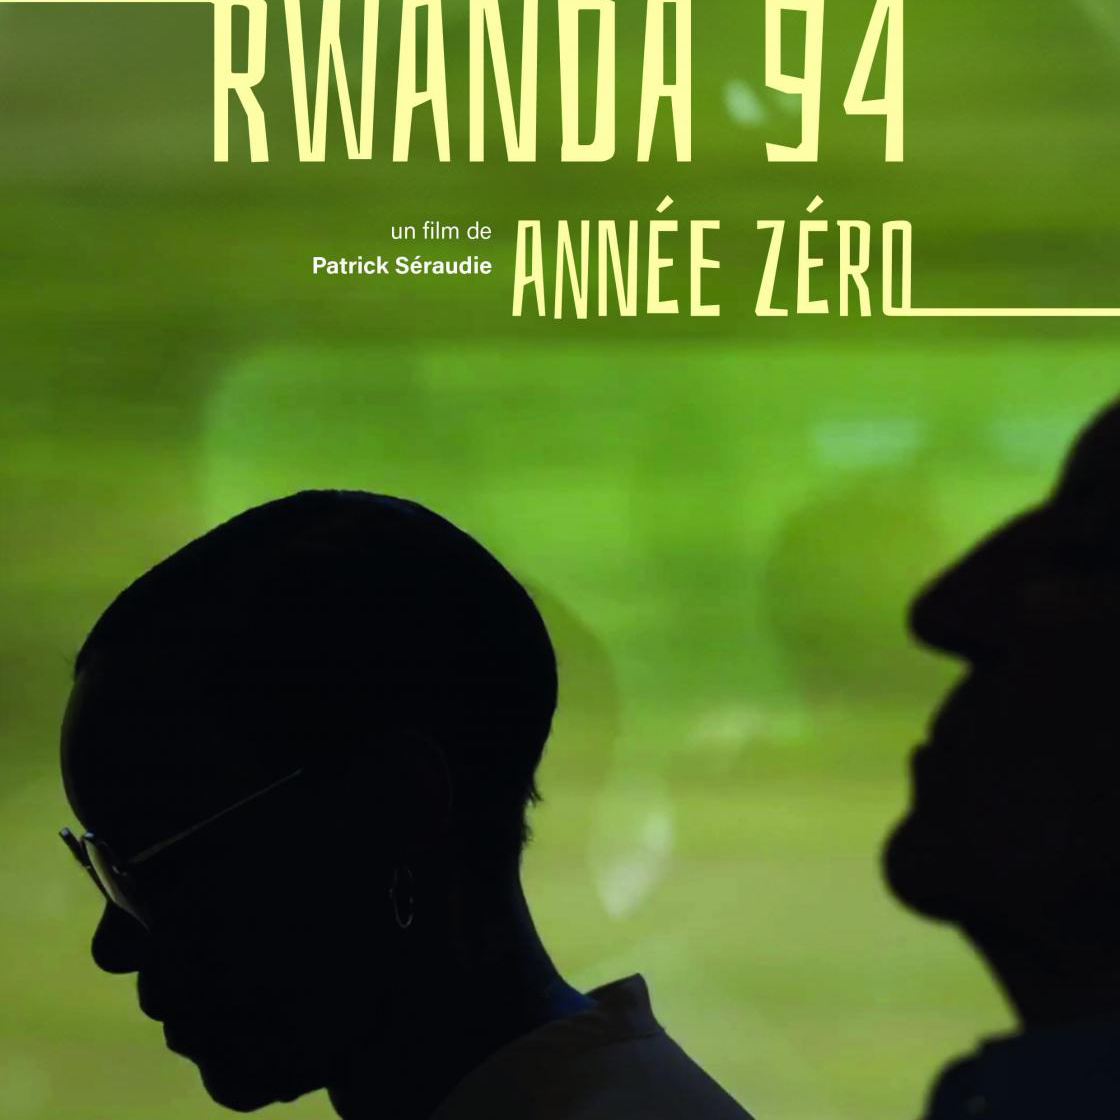 Affichage Rwanda 94 année zéro